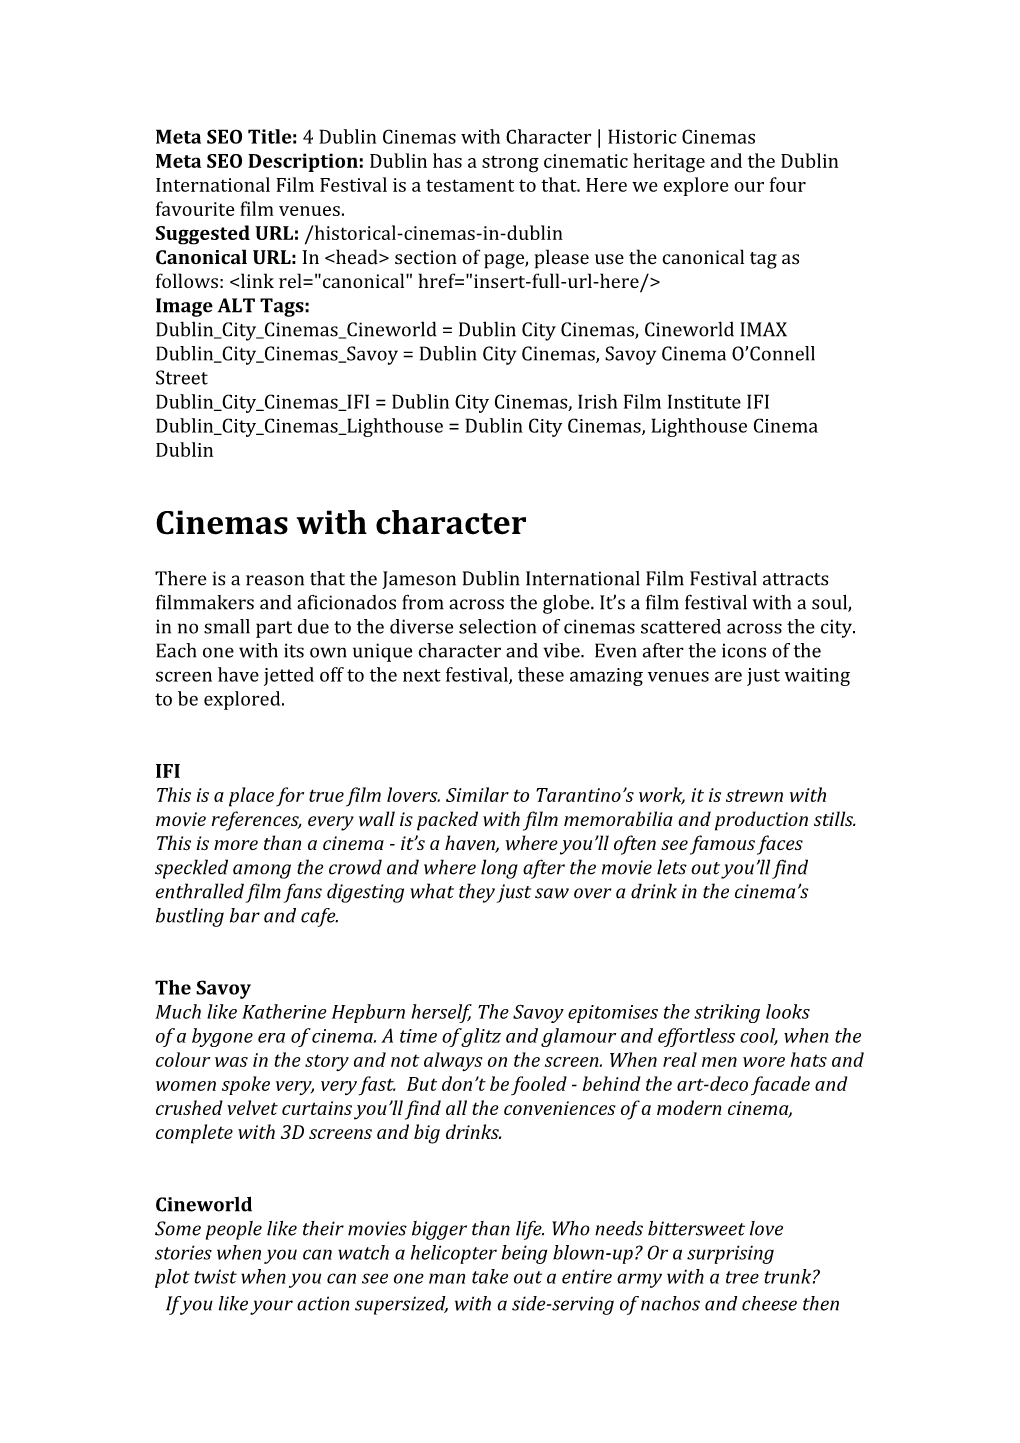 Meta SEO Title: 4 Dublin Cinemas with Character Historic Cinemas